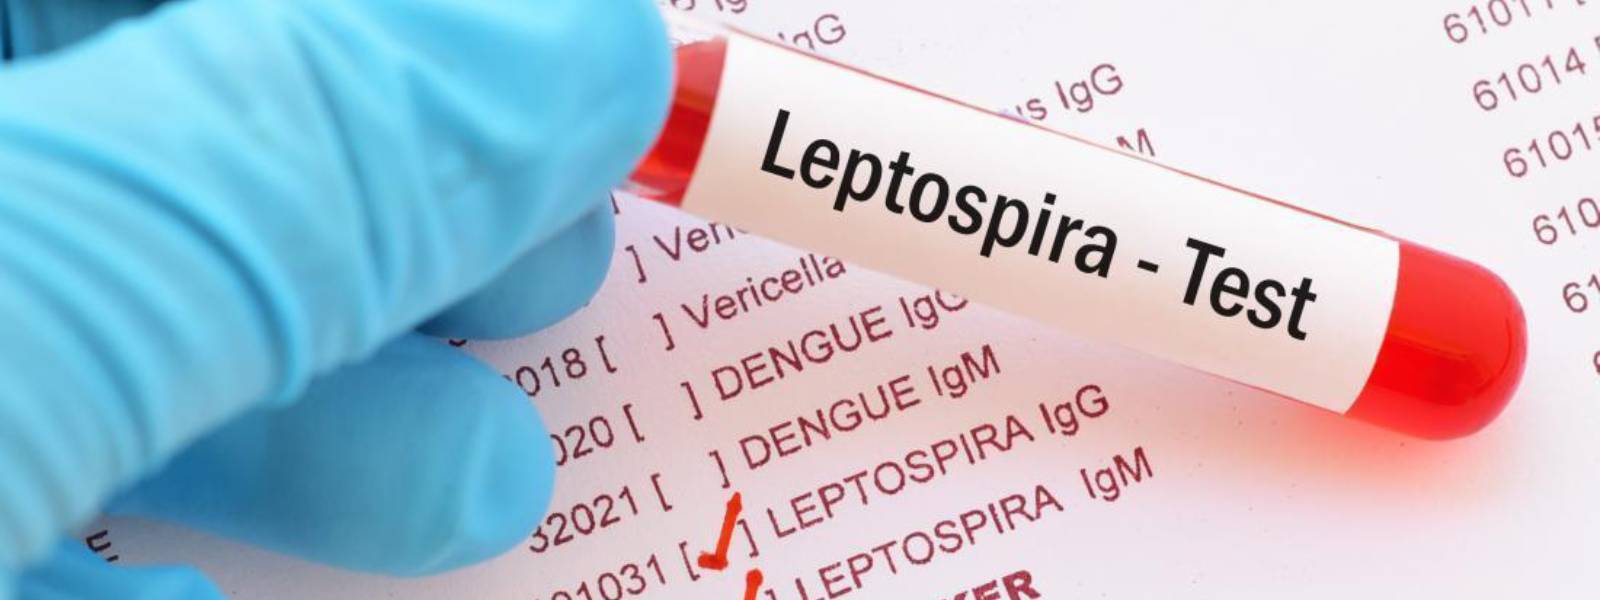 Burden of leptospirosis underestimated - study